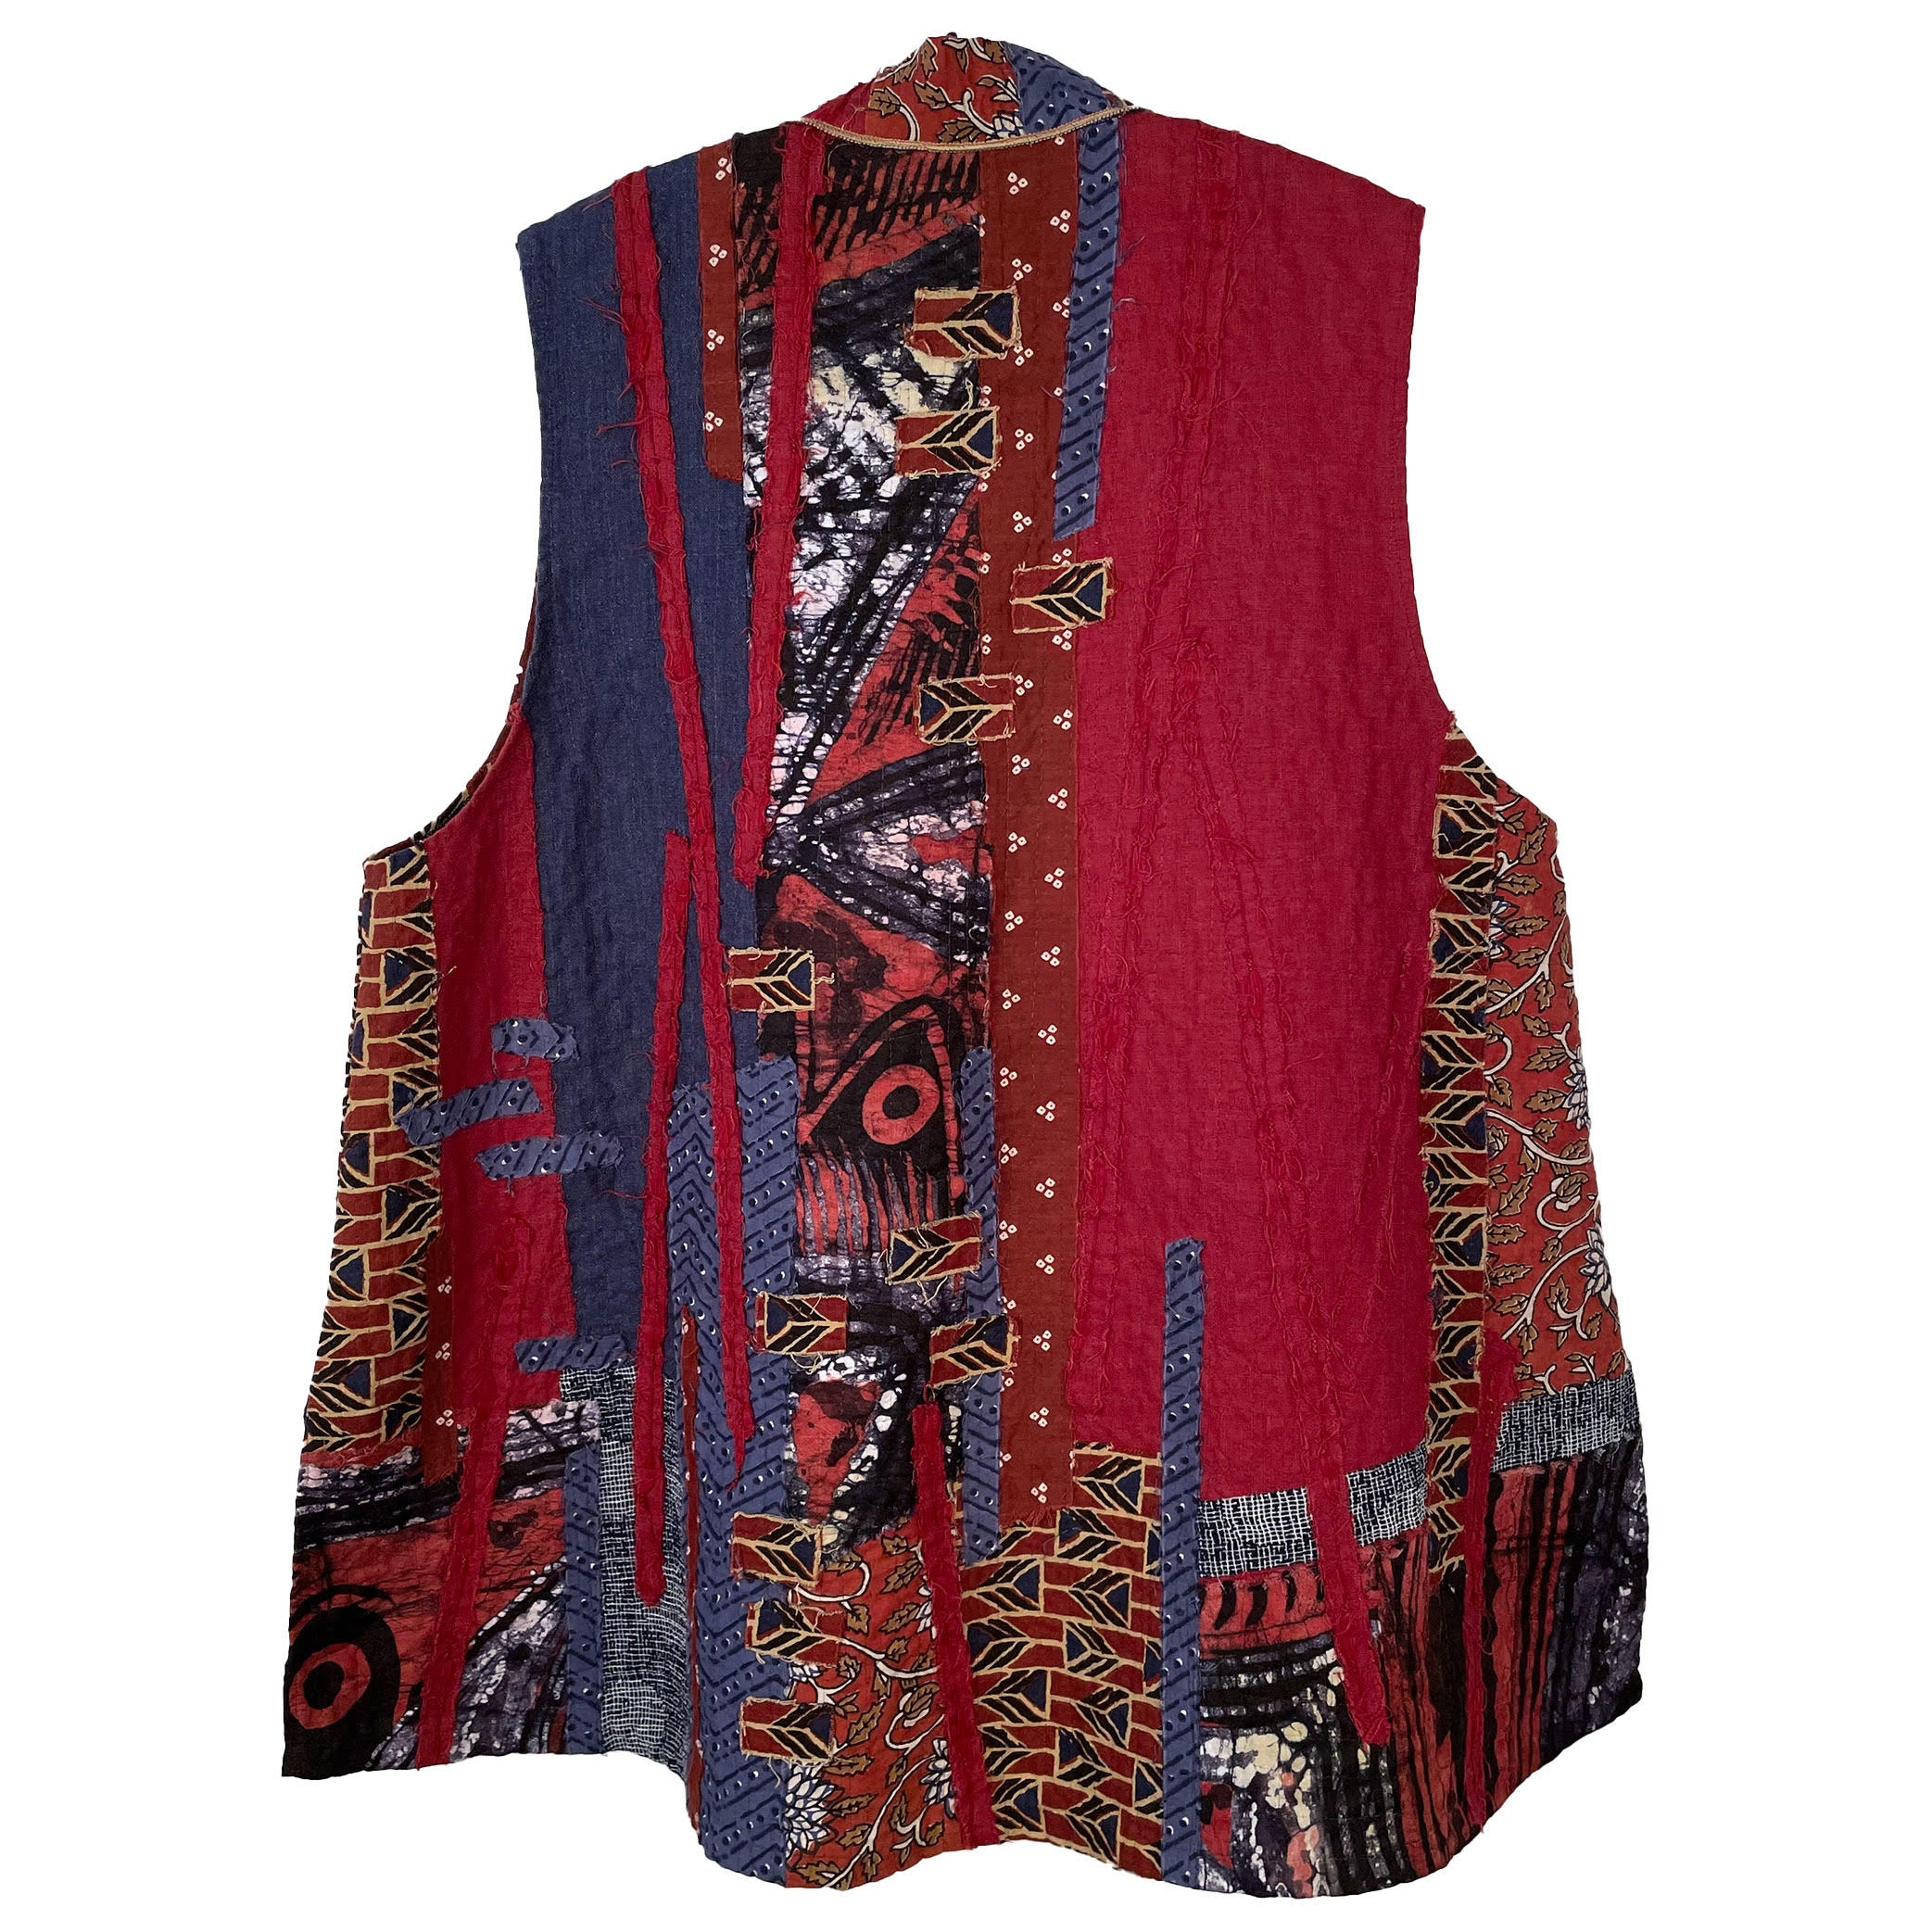 Diane Prekup Vest, Market, Nigerian Batik, Rust/Blue, S